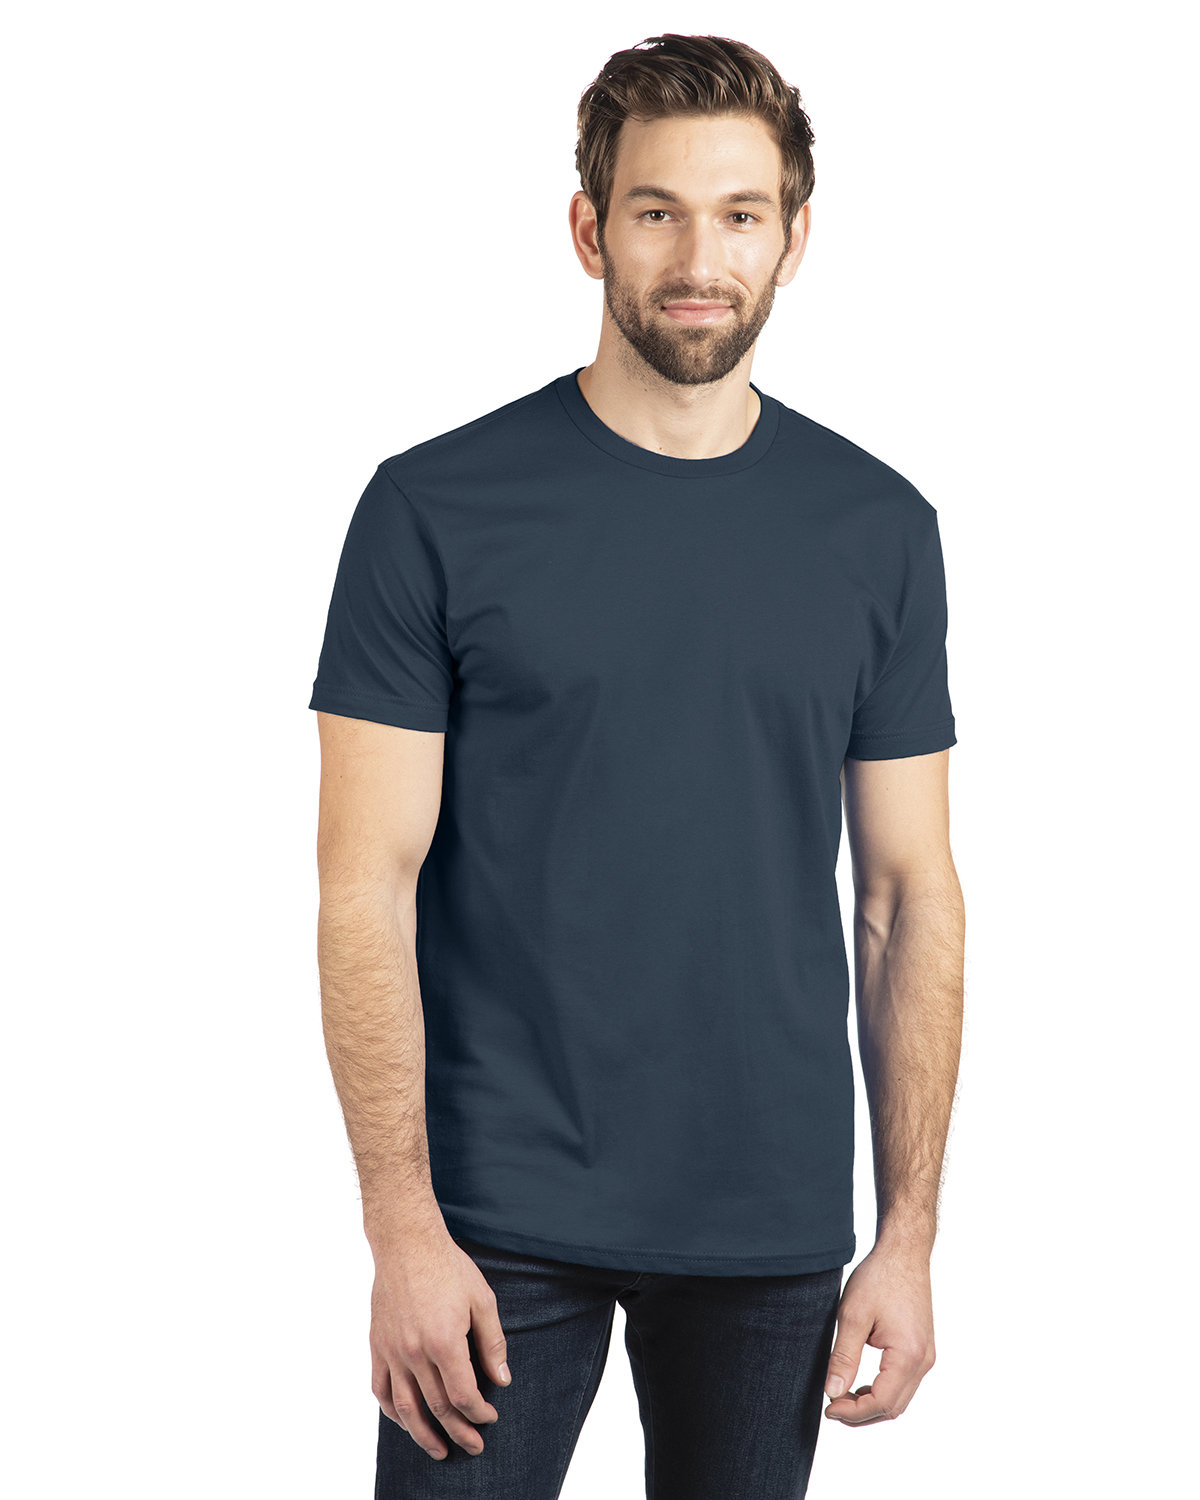 Next Level Apparel Unisex Cotton T-Shirt indigo 